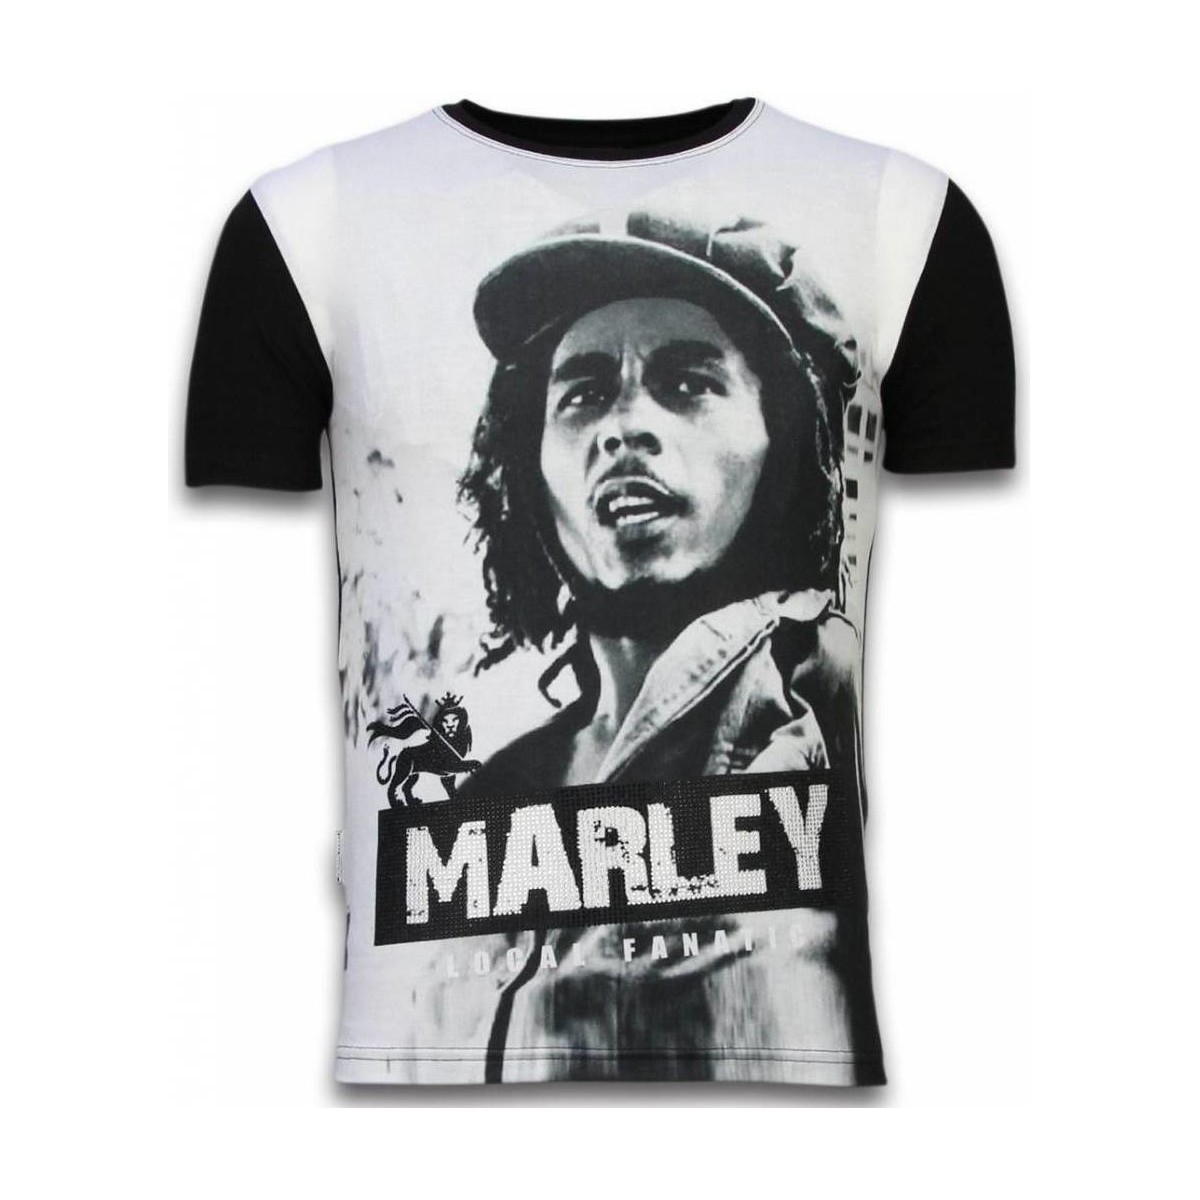 textil Hombre Camisetas manga corta Local Fanatic Bob Marley Black And White Digital Negro